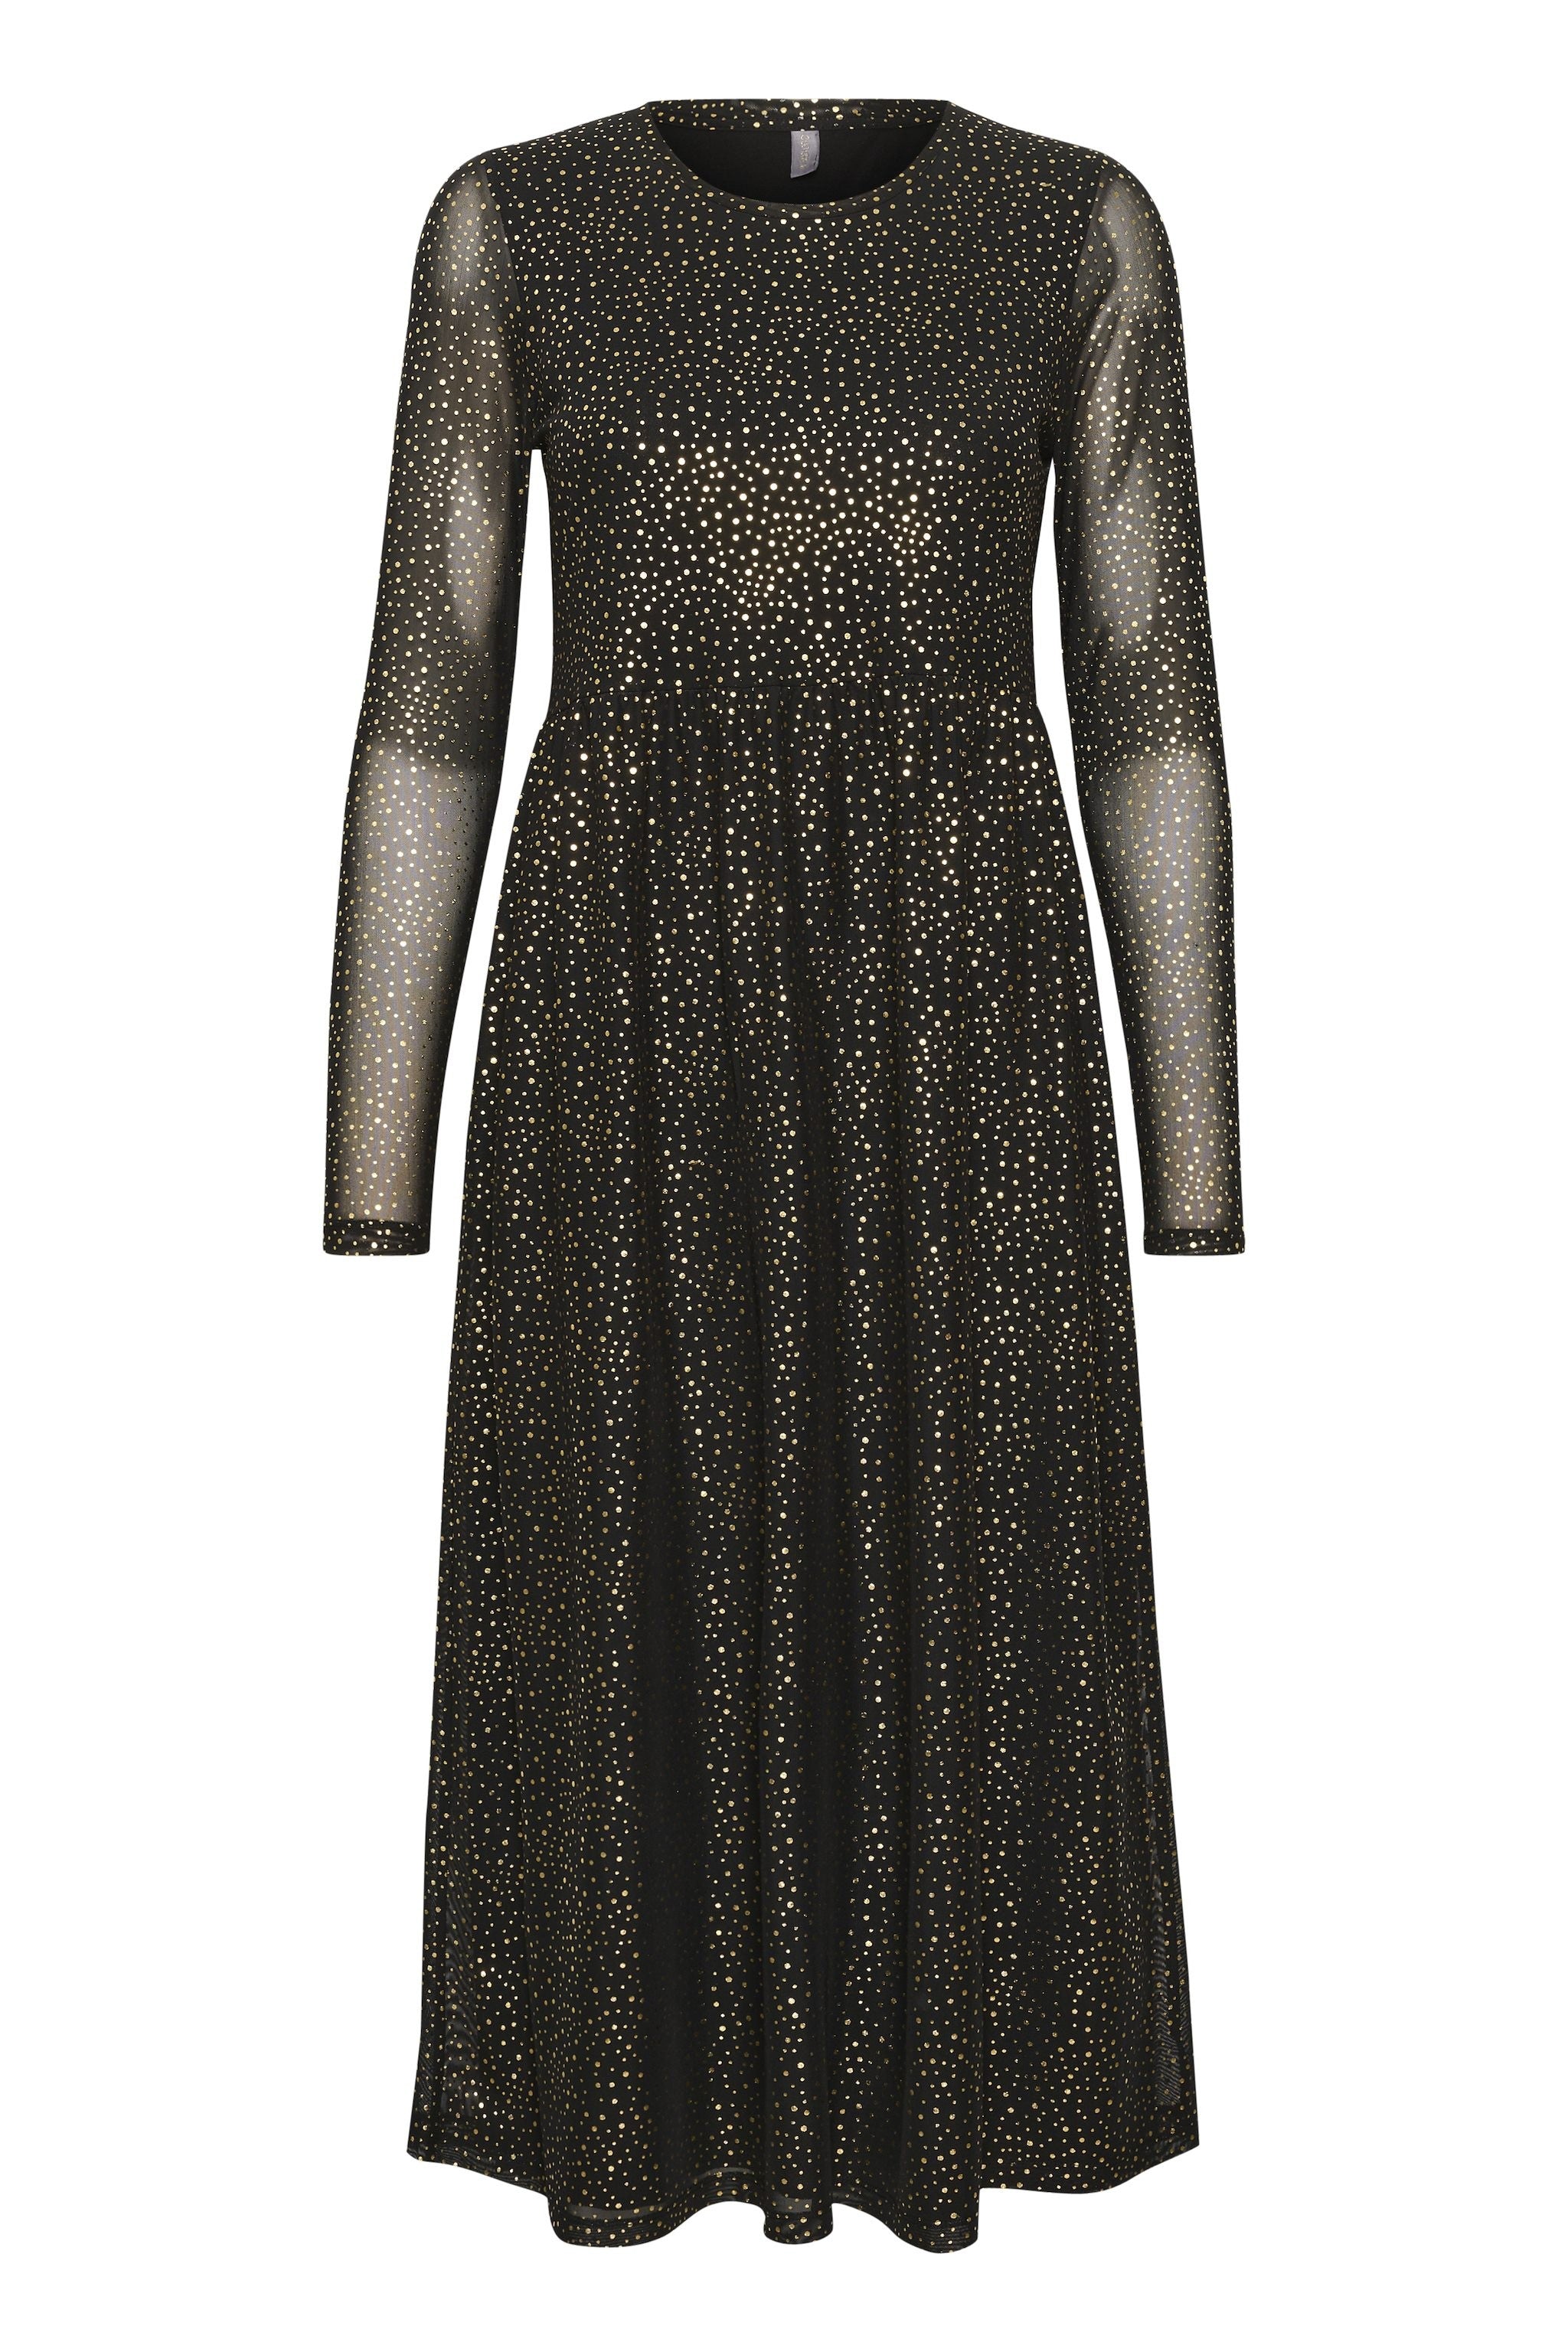 Culture Gold Midi Dress